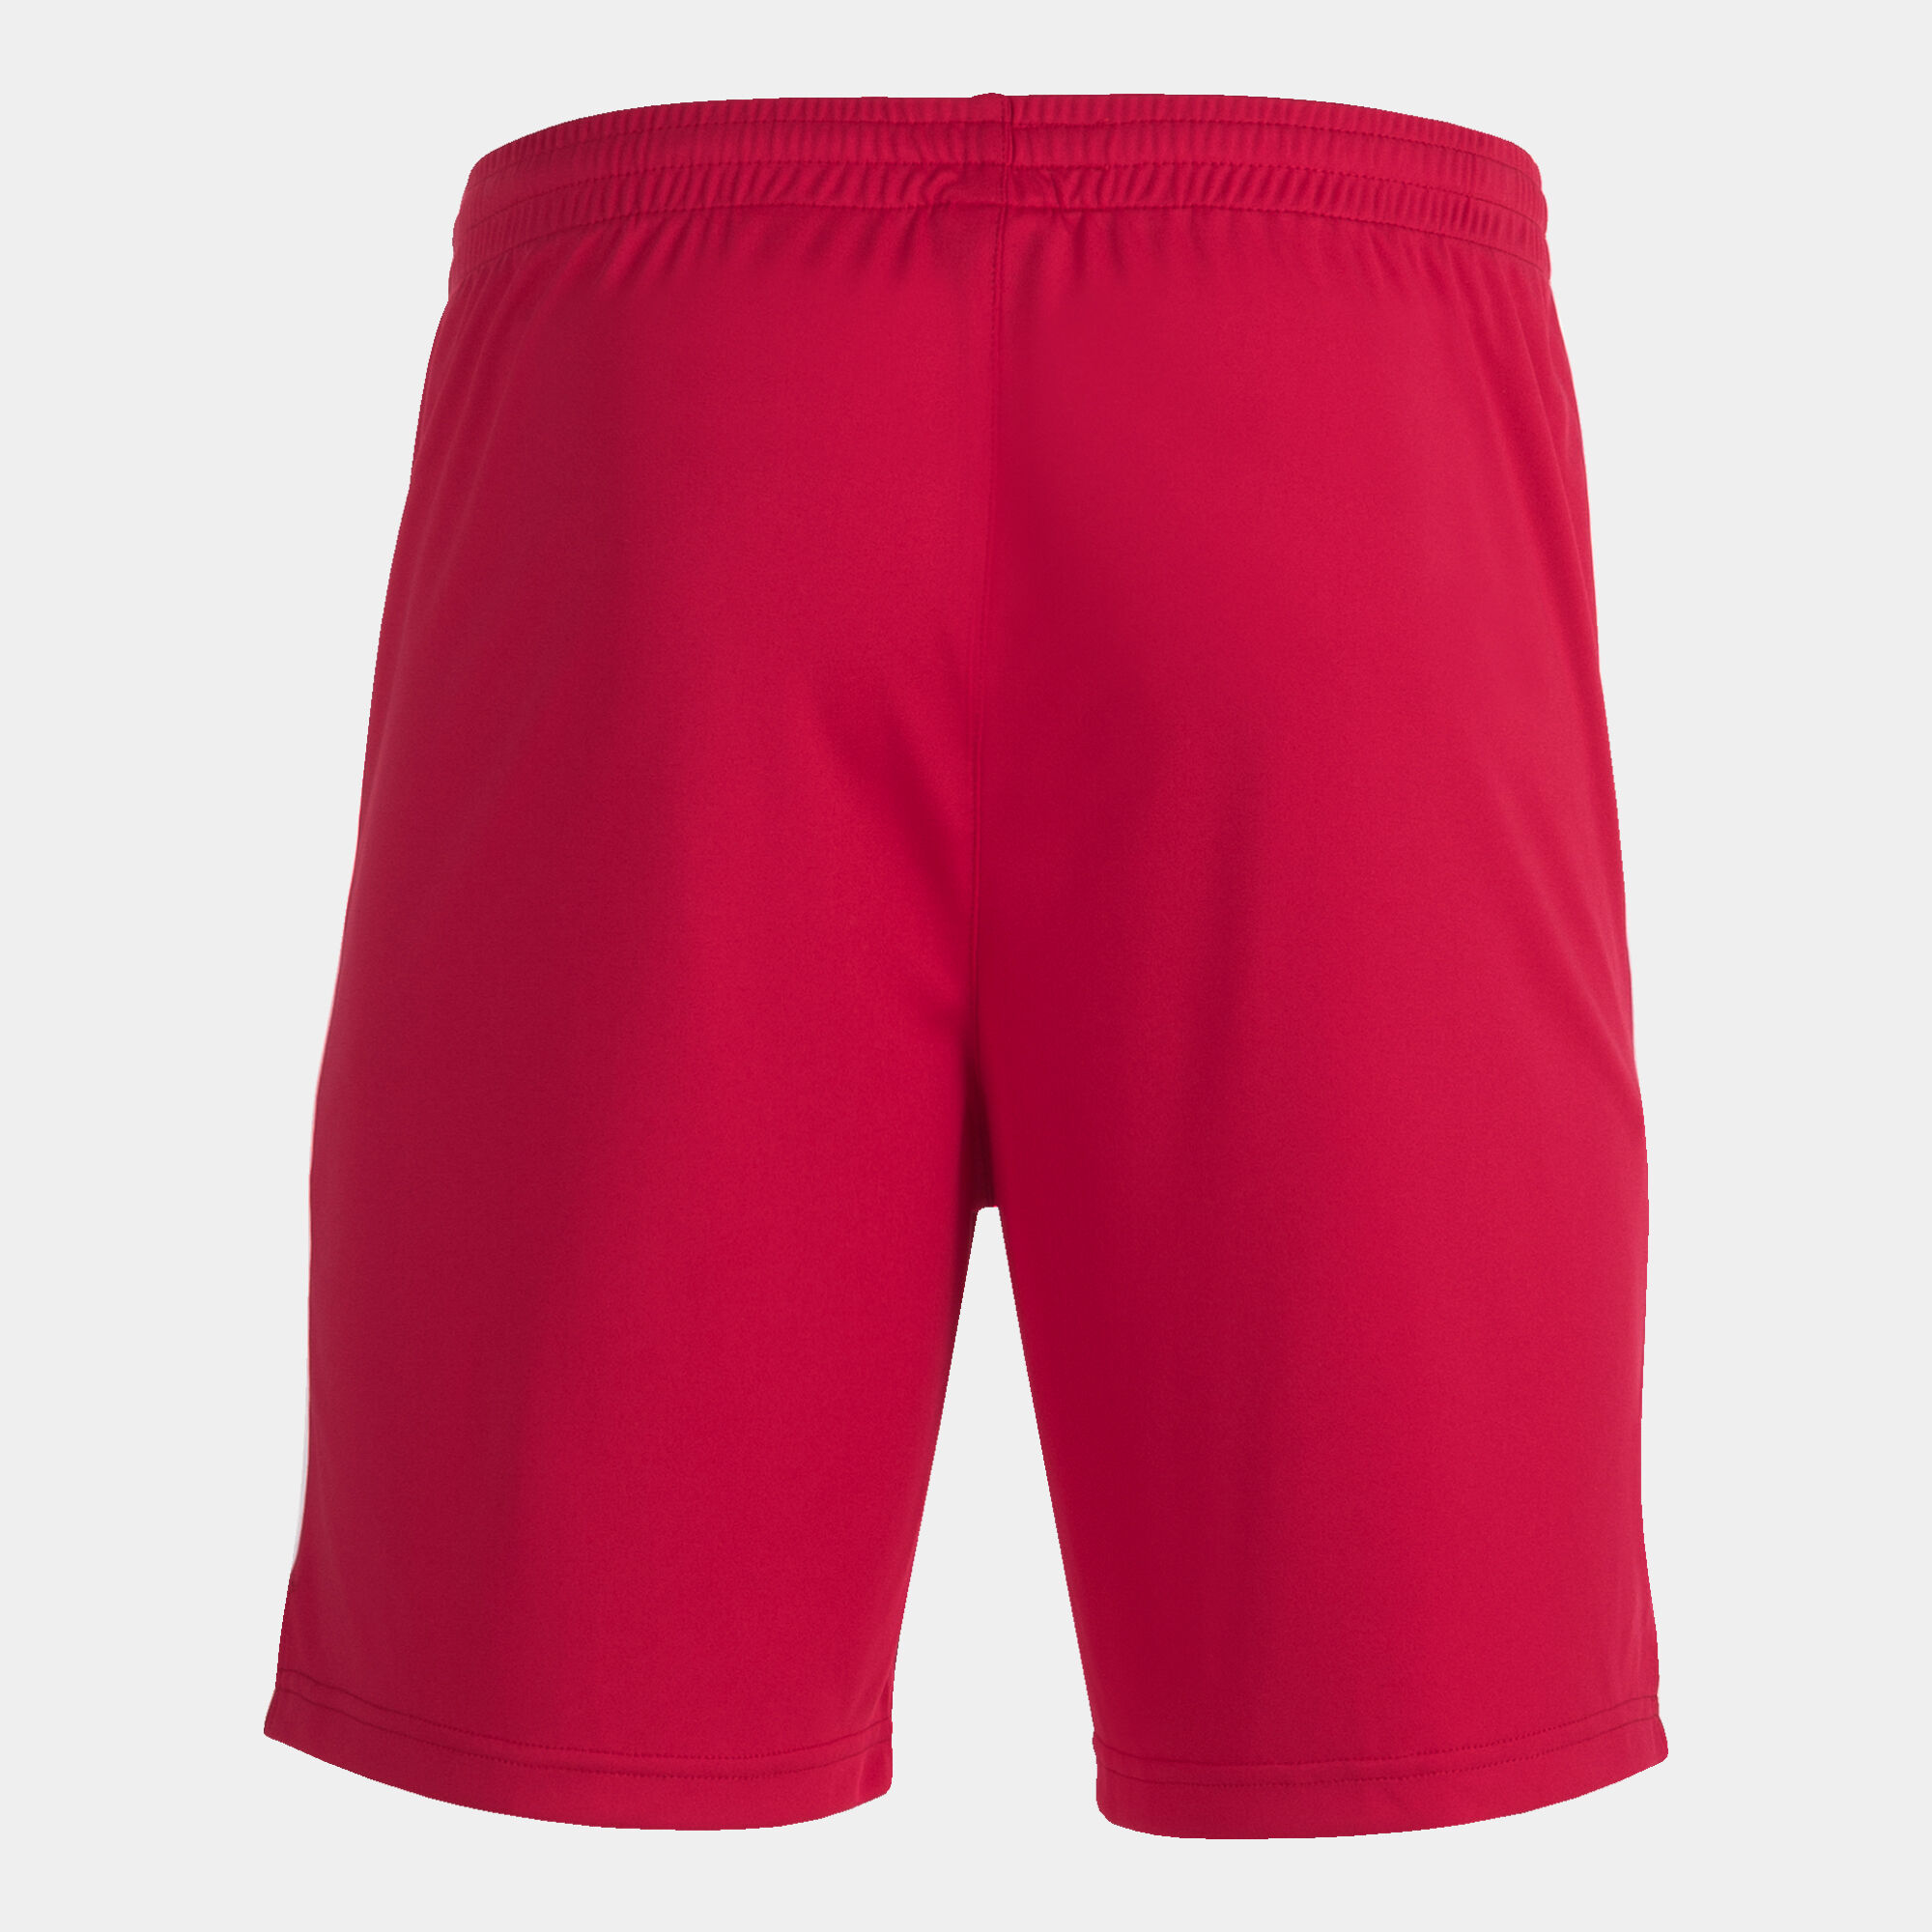 Bermuda shorts man Open III red white